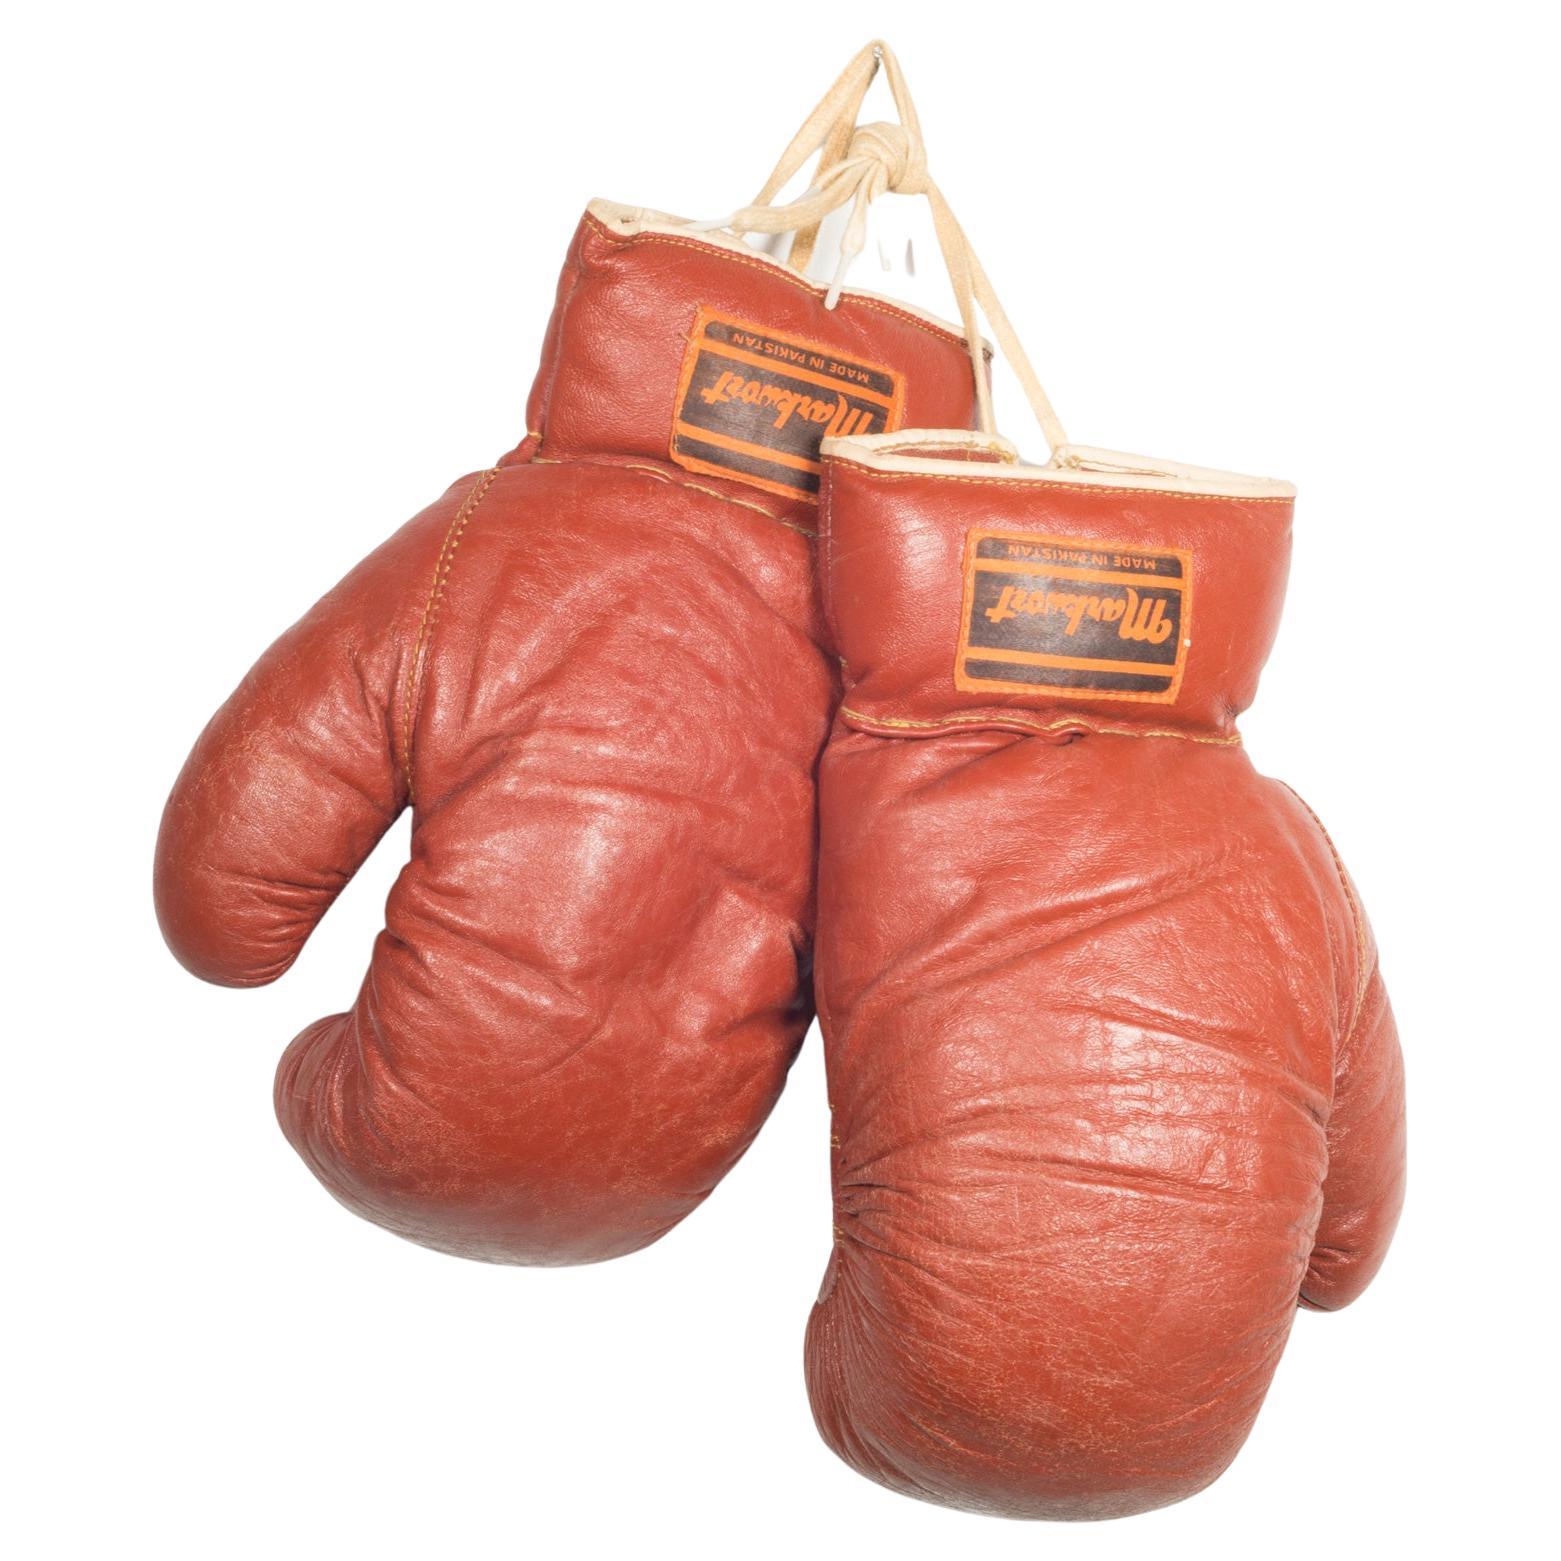 Vintage Leather Markwort Boxing Gloves c.1950 (FREE SHIPPING)